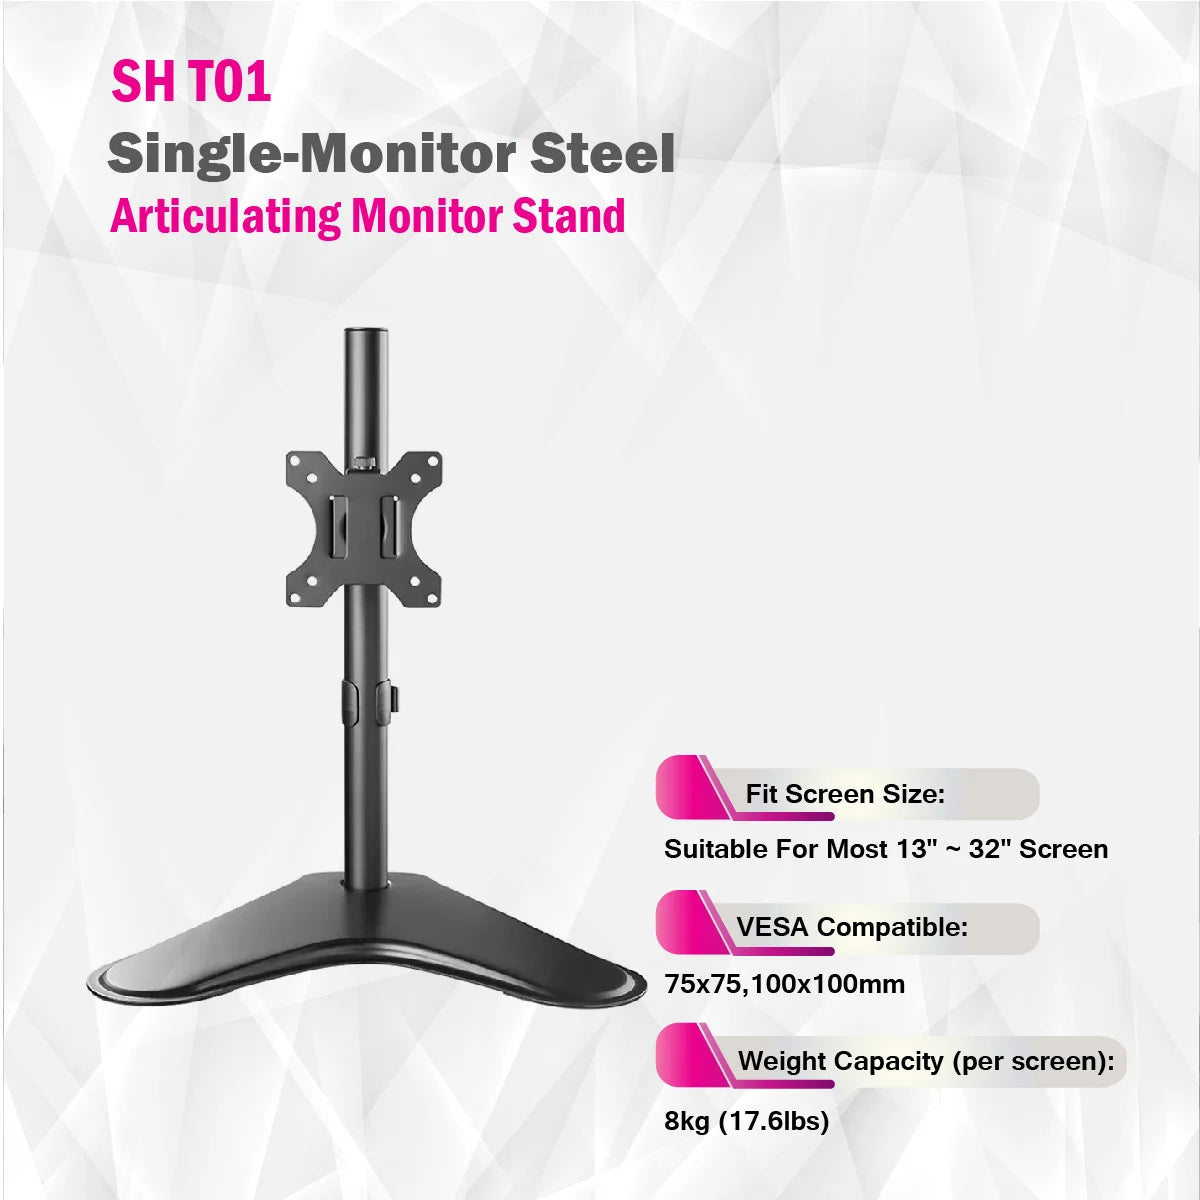 SkillTech -SH T01 - Single-Monitor Steel Articulating Monitor Mount